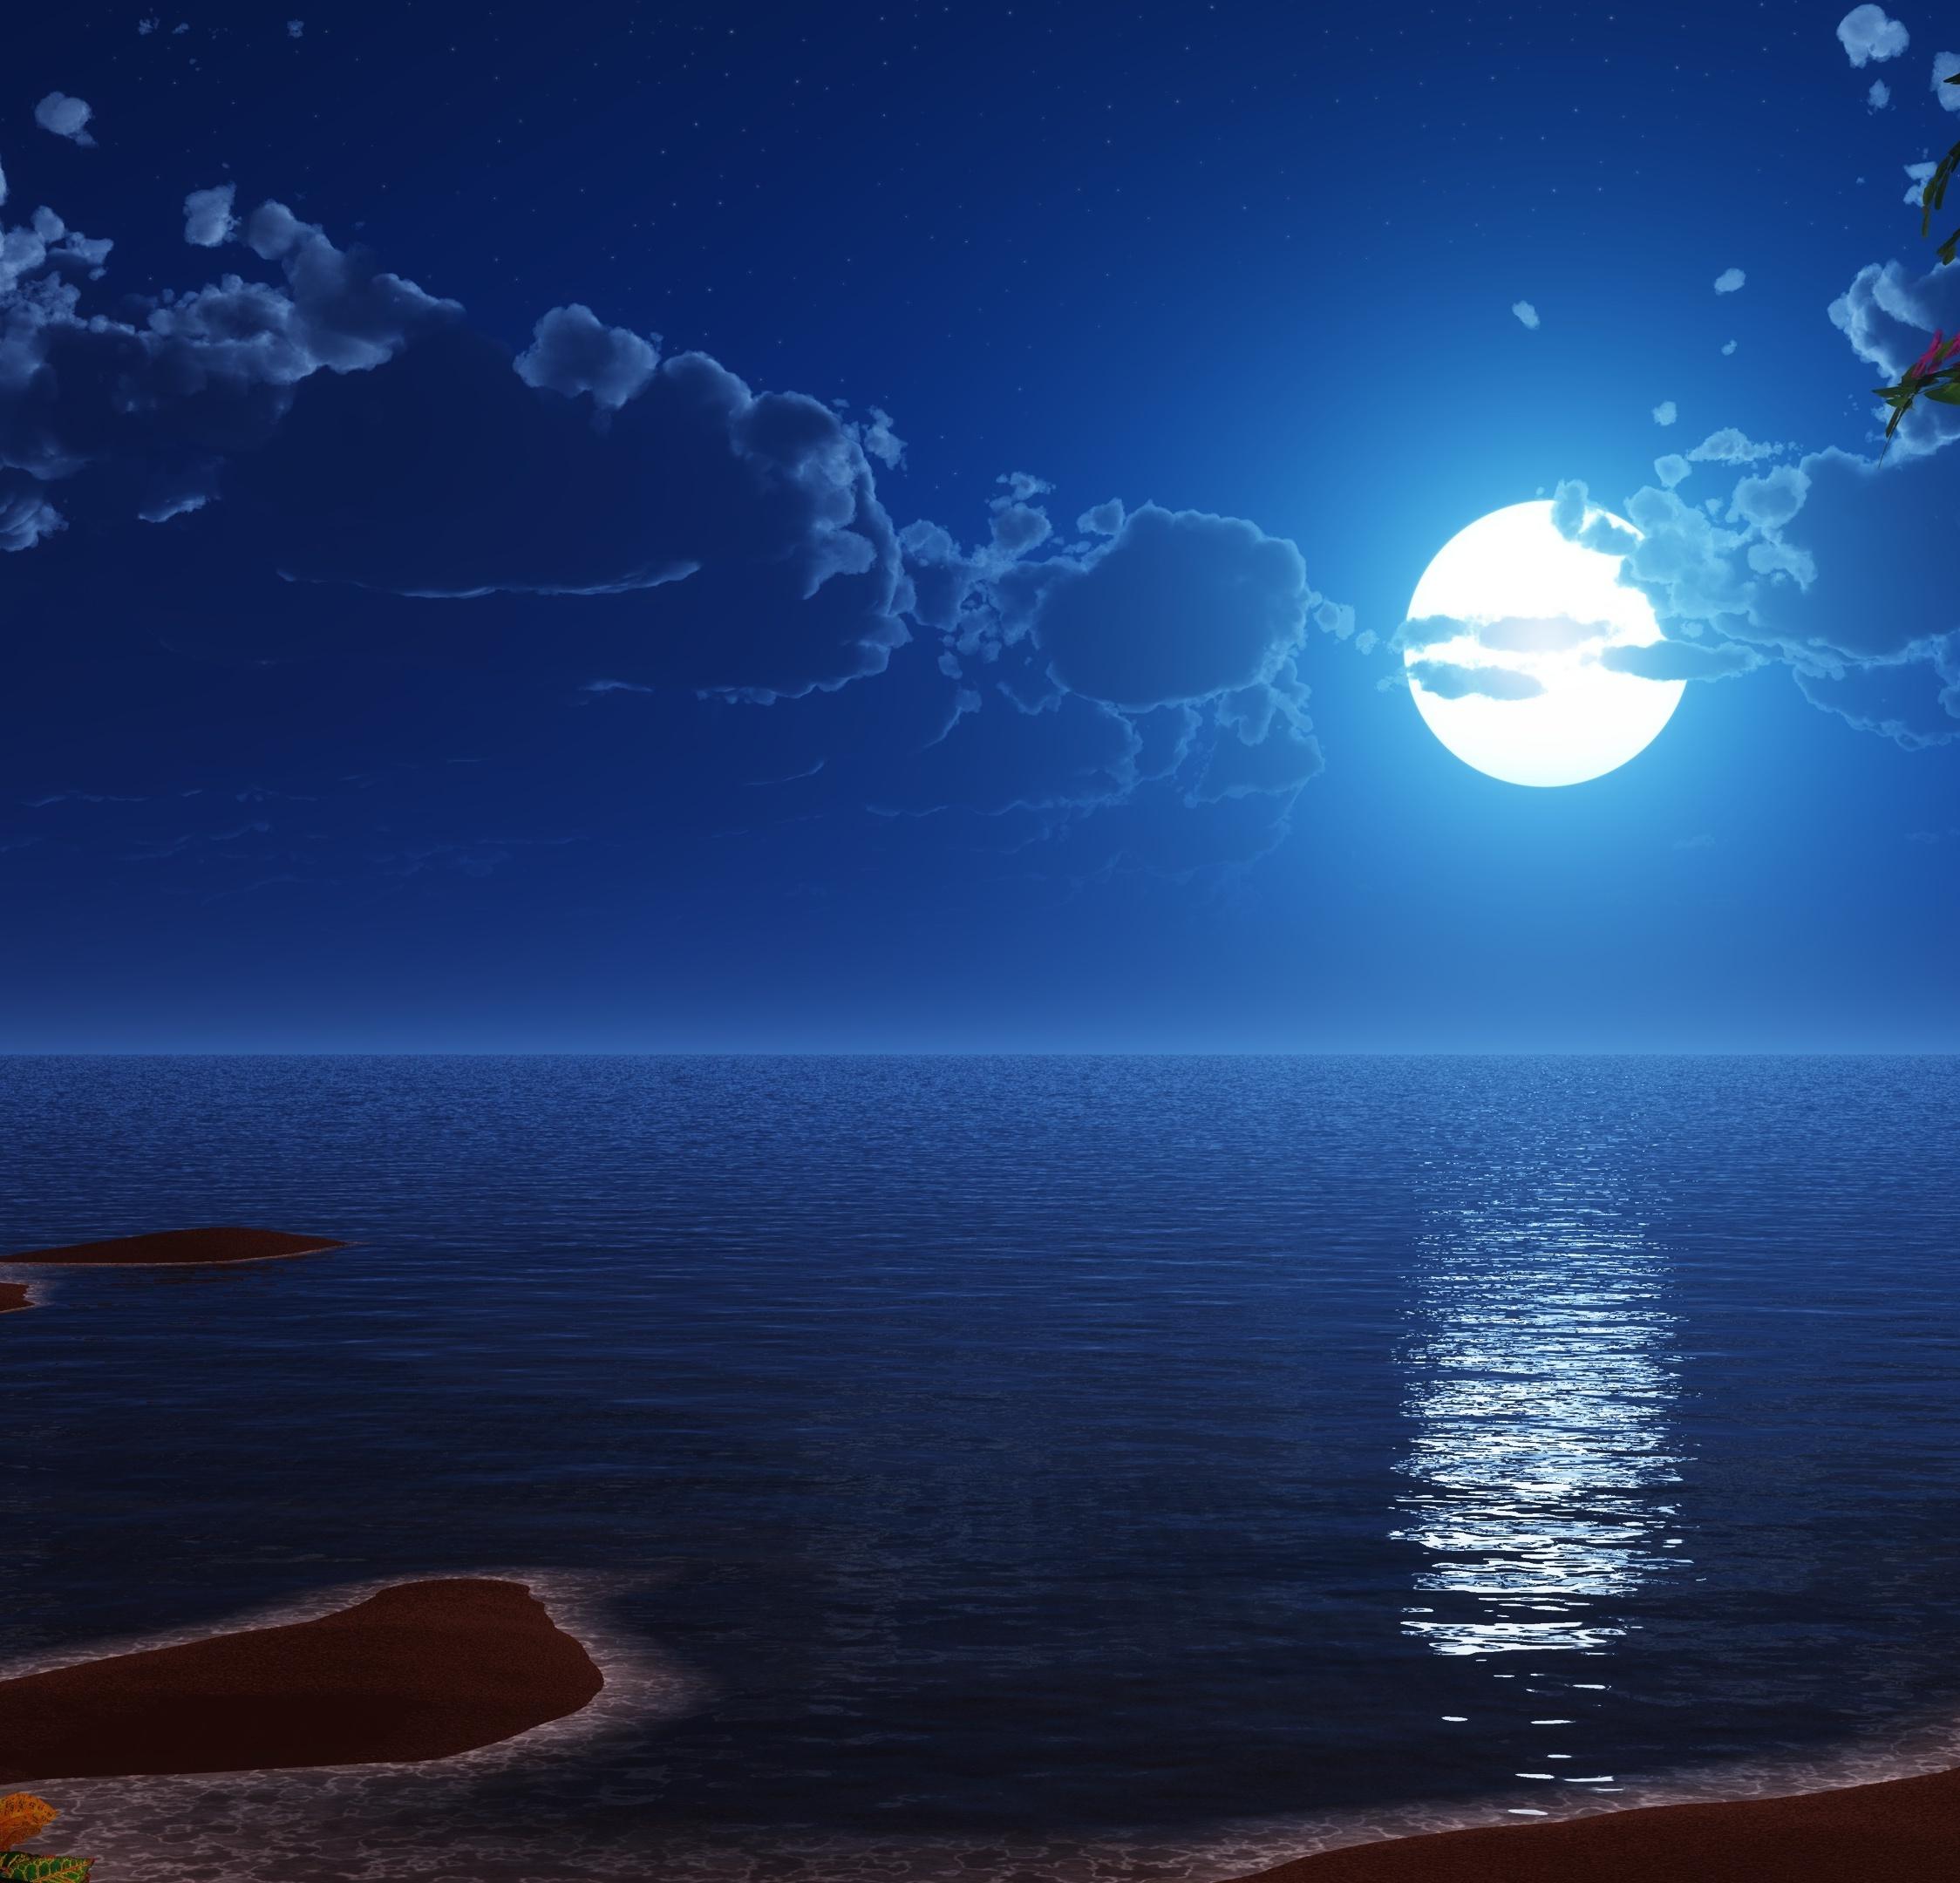 Download 2248x2248 wallpaper tropical beach, coast, full moon, night